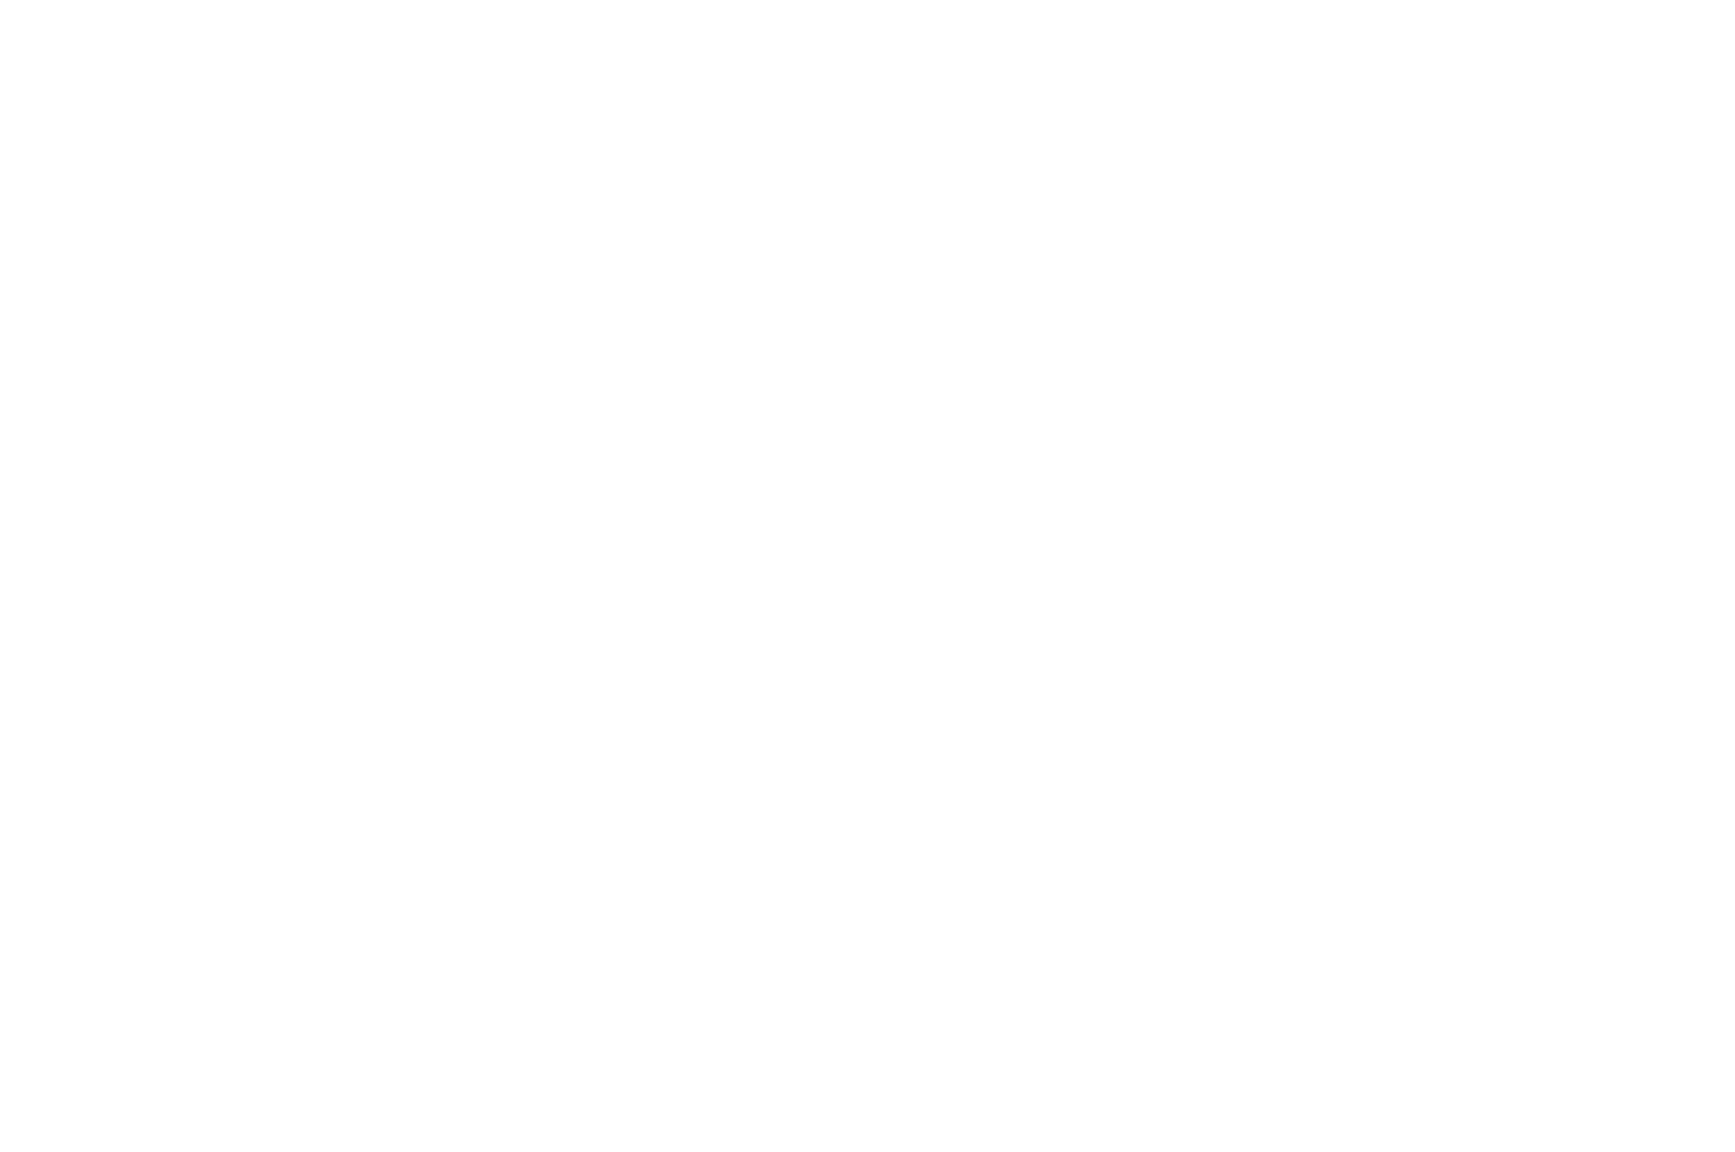 BEST MUSIC VIDEO - Cinema World Fest Awards - 2022